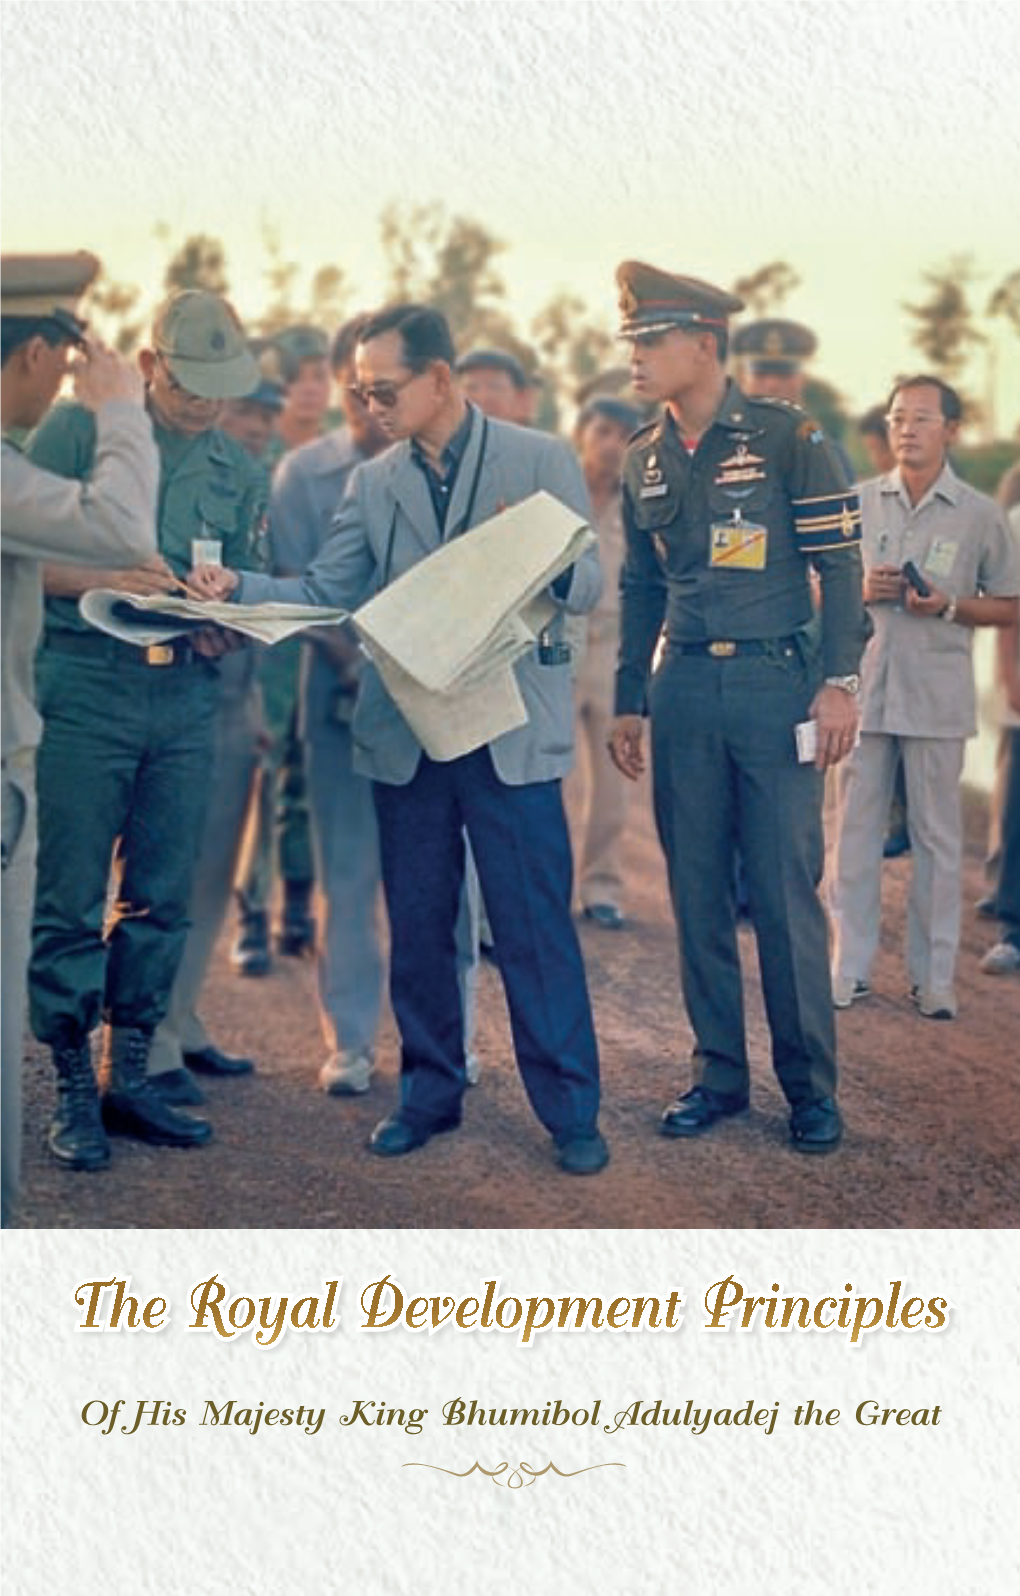 Of His Majesty King Bhumibol Adulyadej the Great